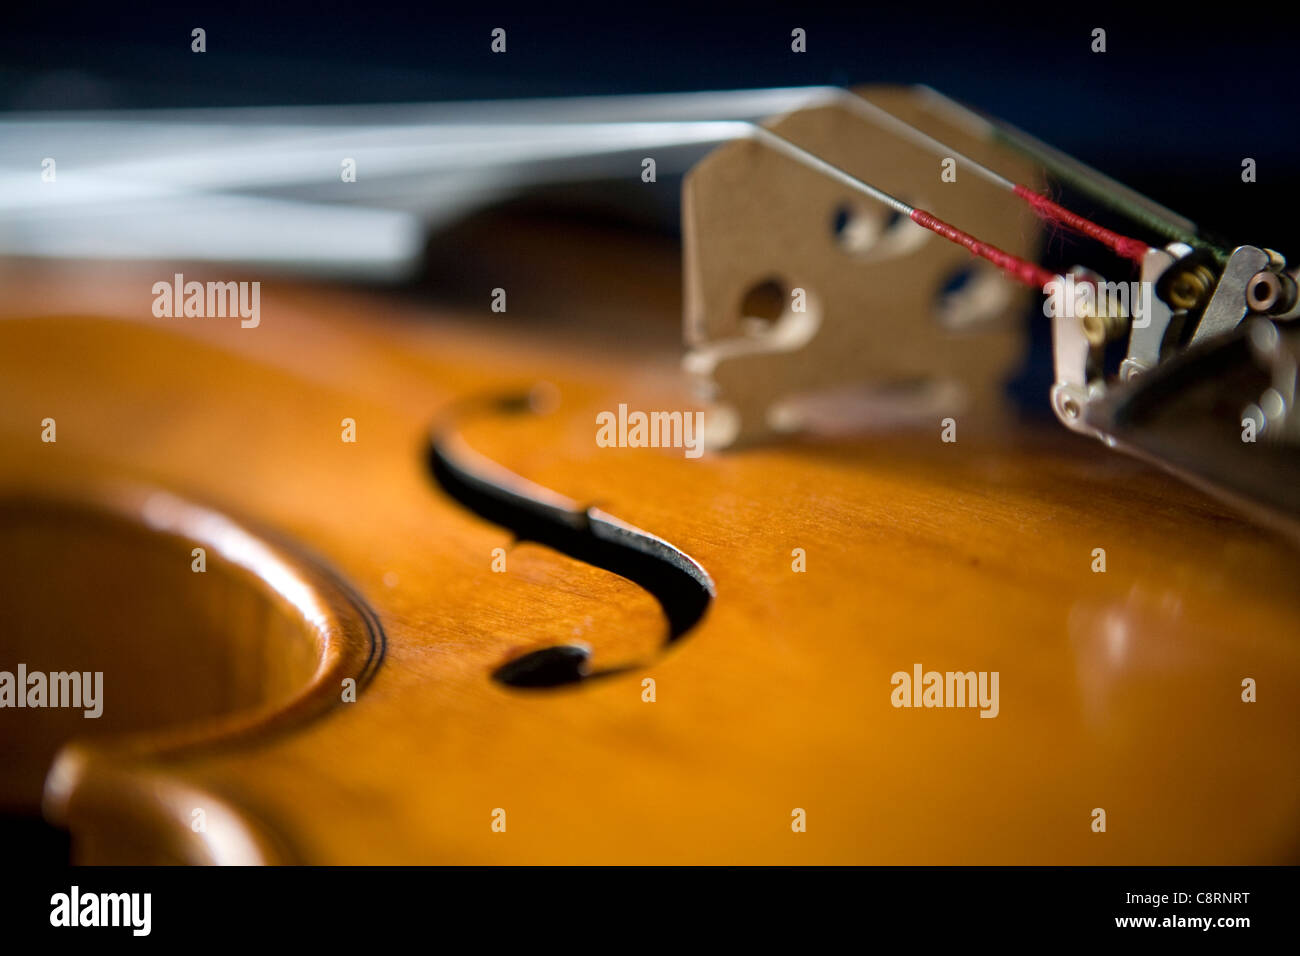 close-up photograph of Bridge of the family Viola violin, classical music instrument, studio photograph Stock Photo